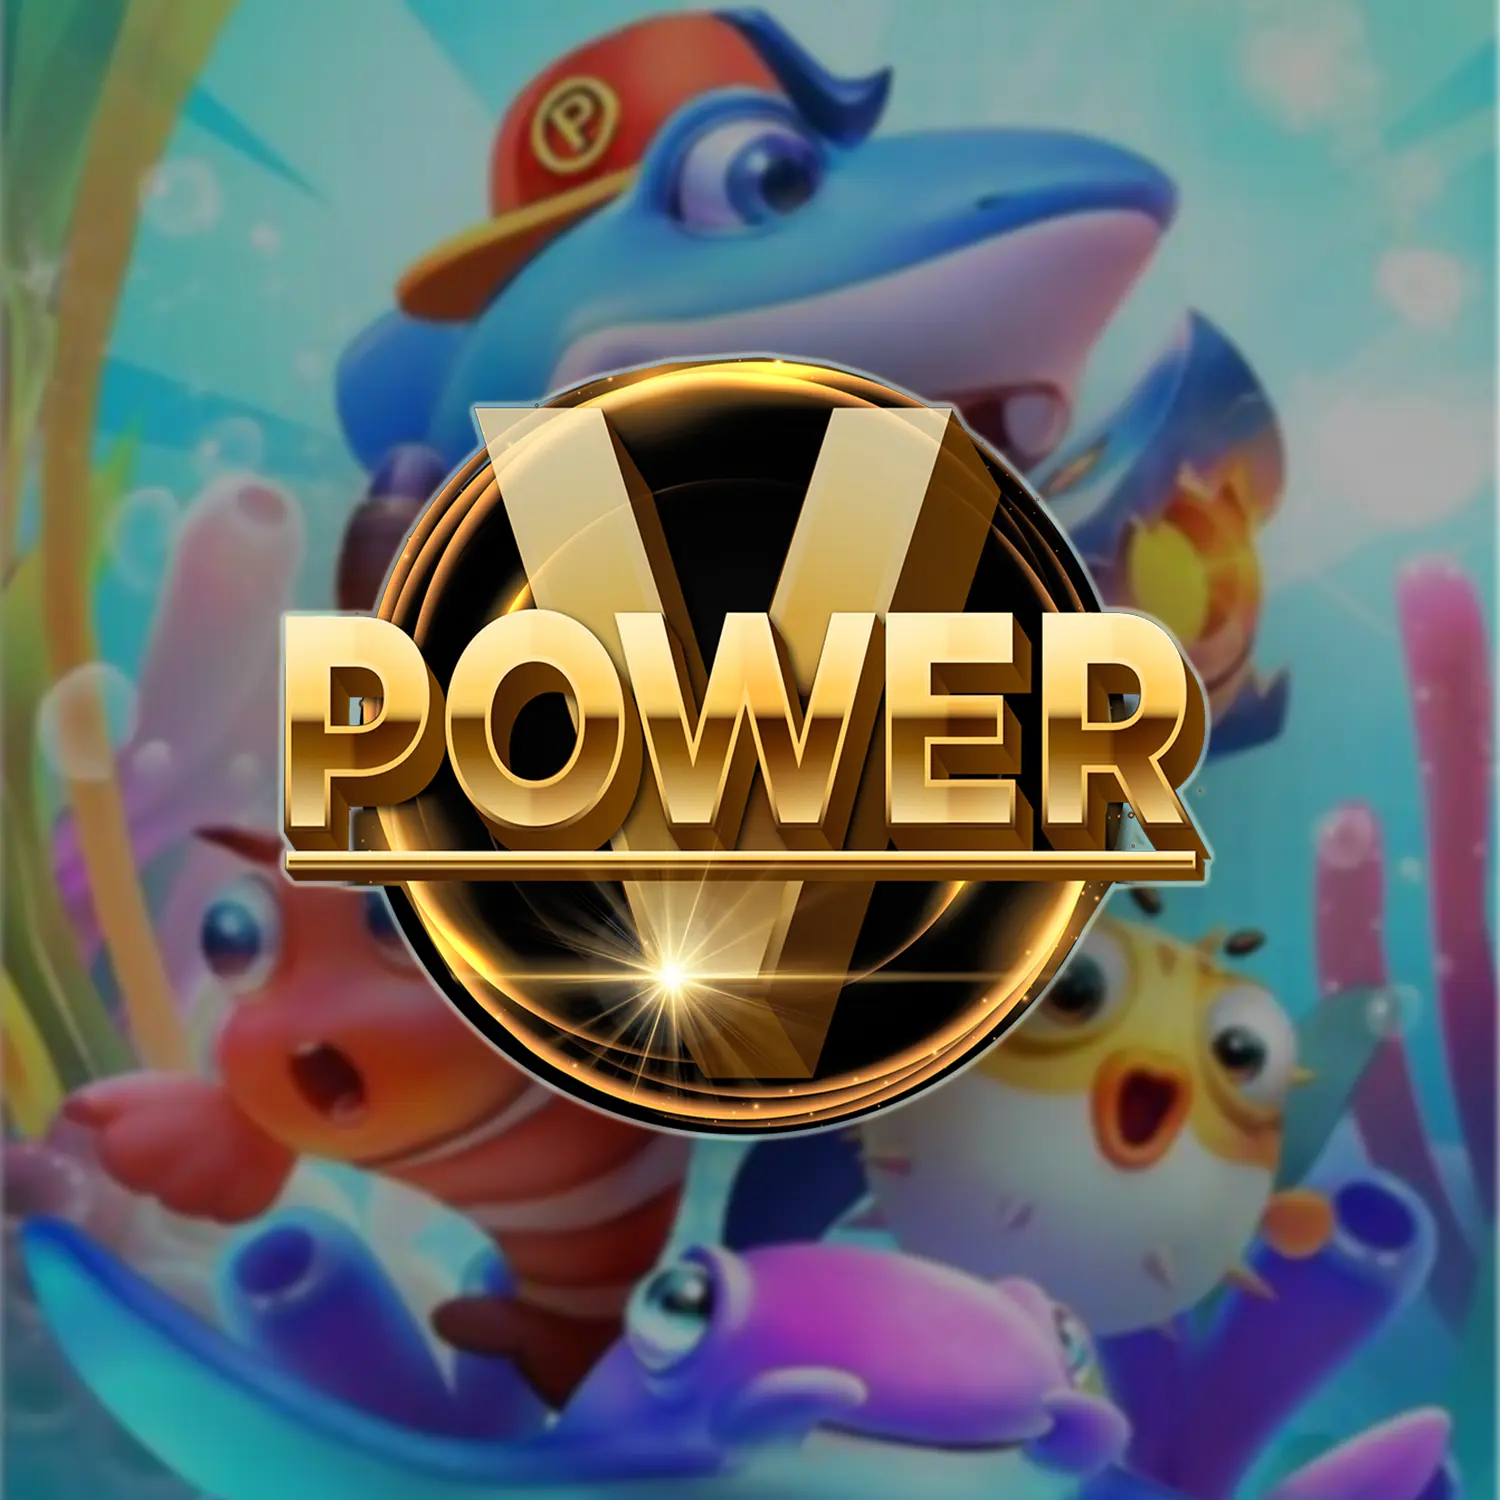 VPower חדש בחדות גבוהה דגי משחק ארקייד משחק לוח להרוויח <span class=keywords><strong>כסף</strong></span> משחקים באינטרנט